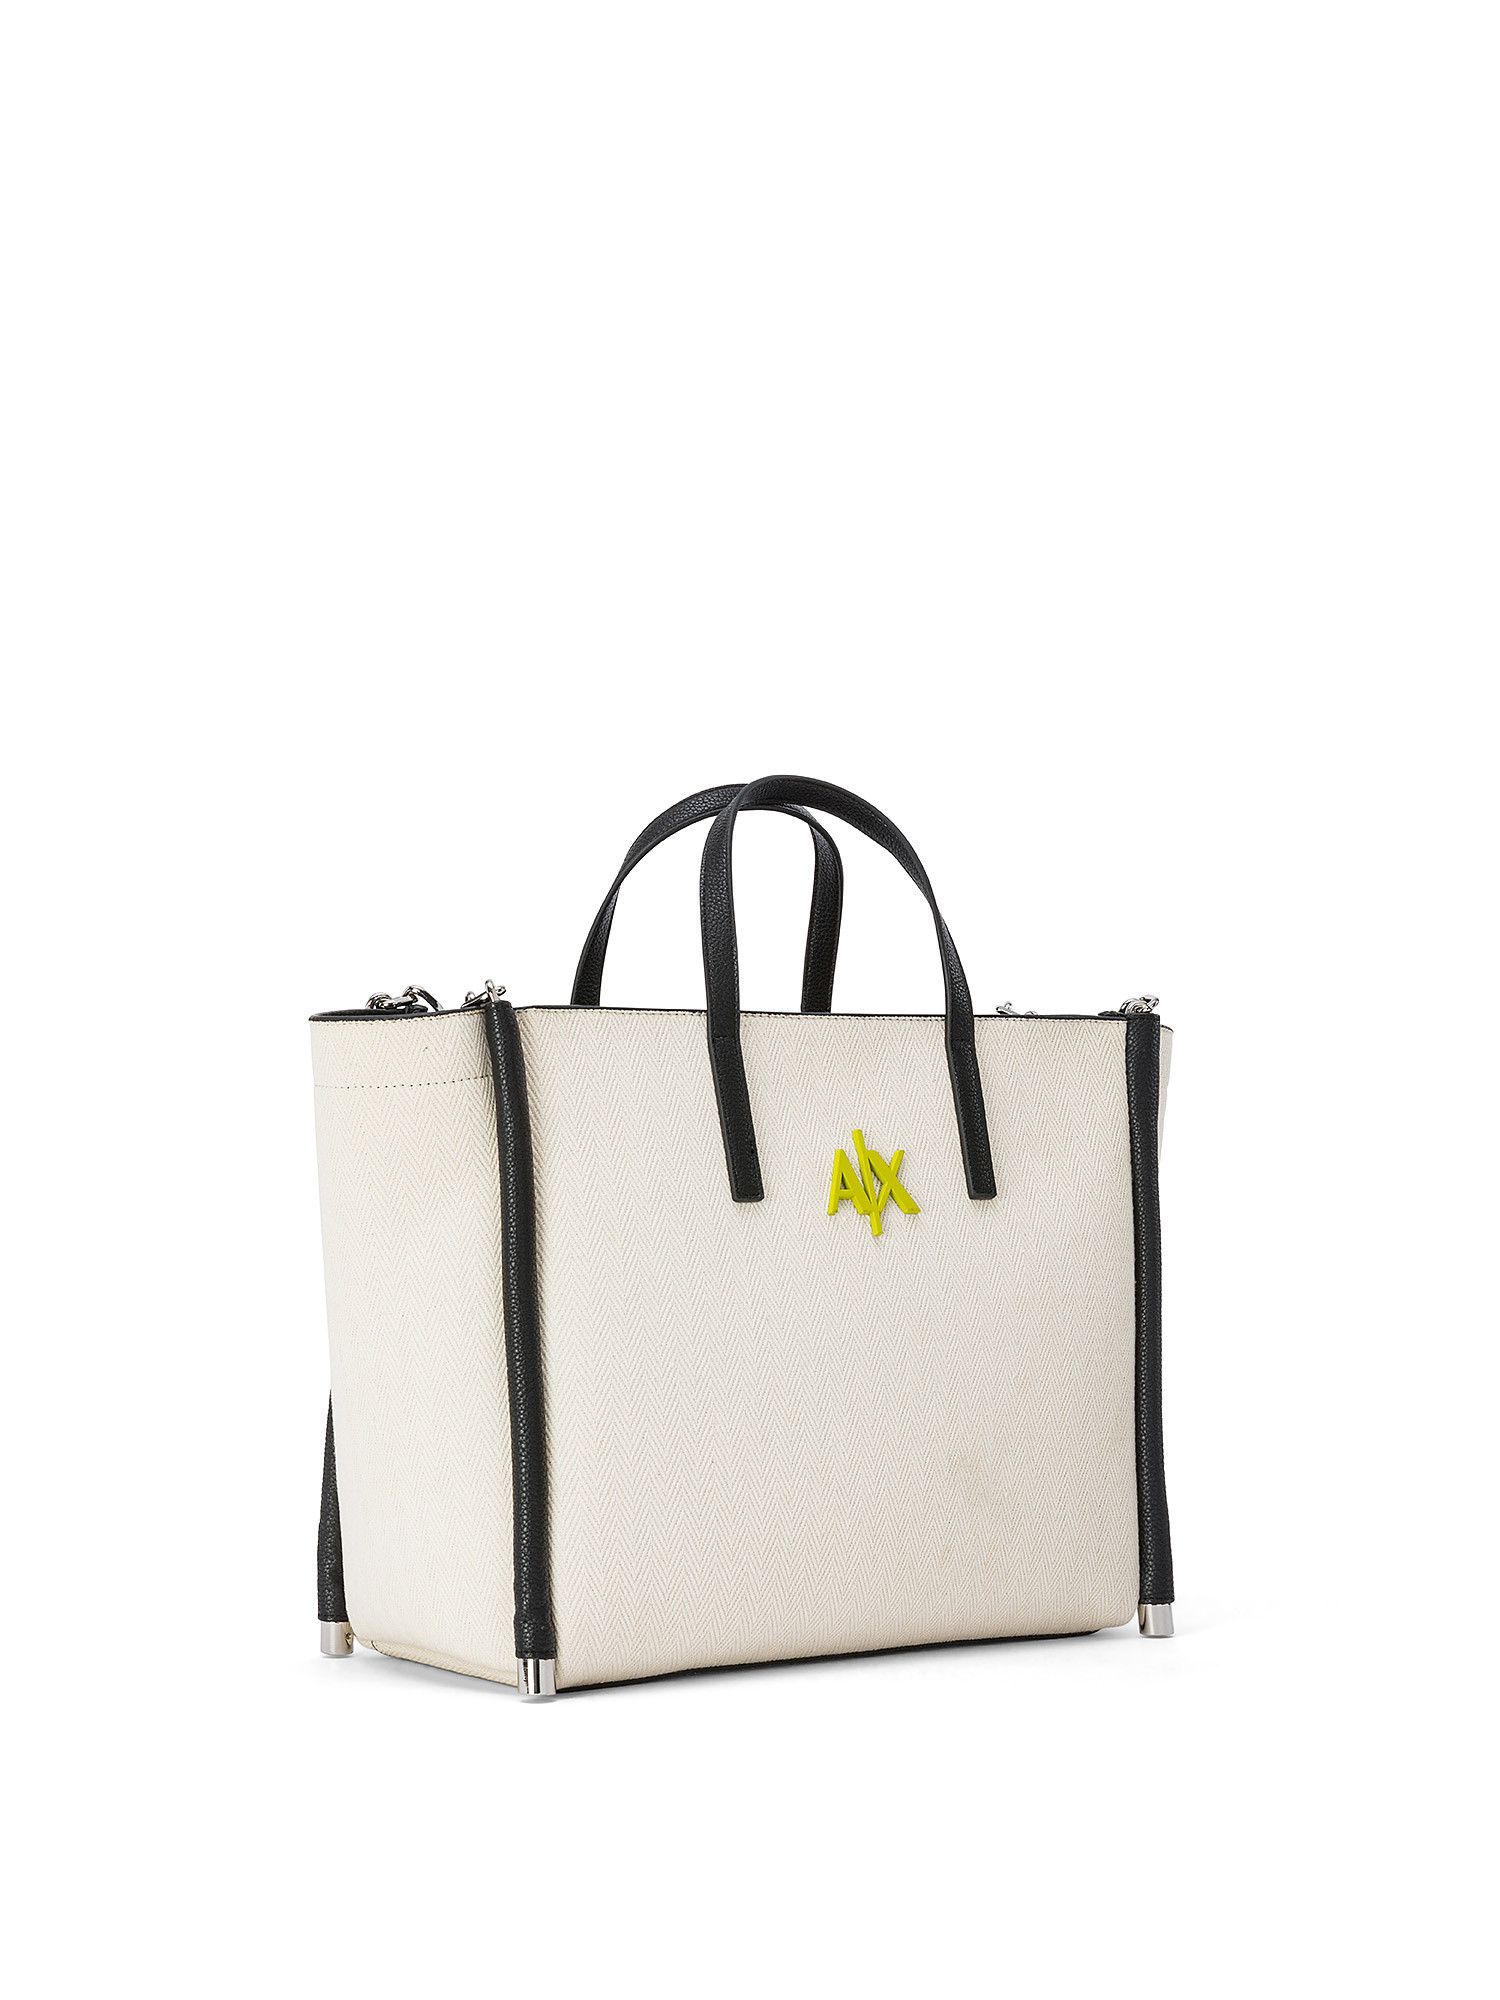 Armani Exchange - Shopper bag con logo, Beige chiaro, large image number 1